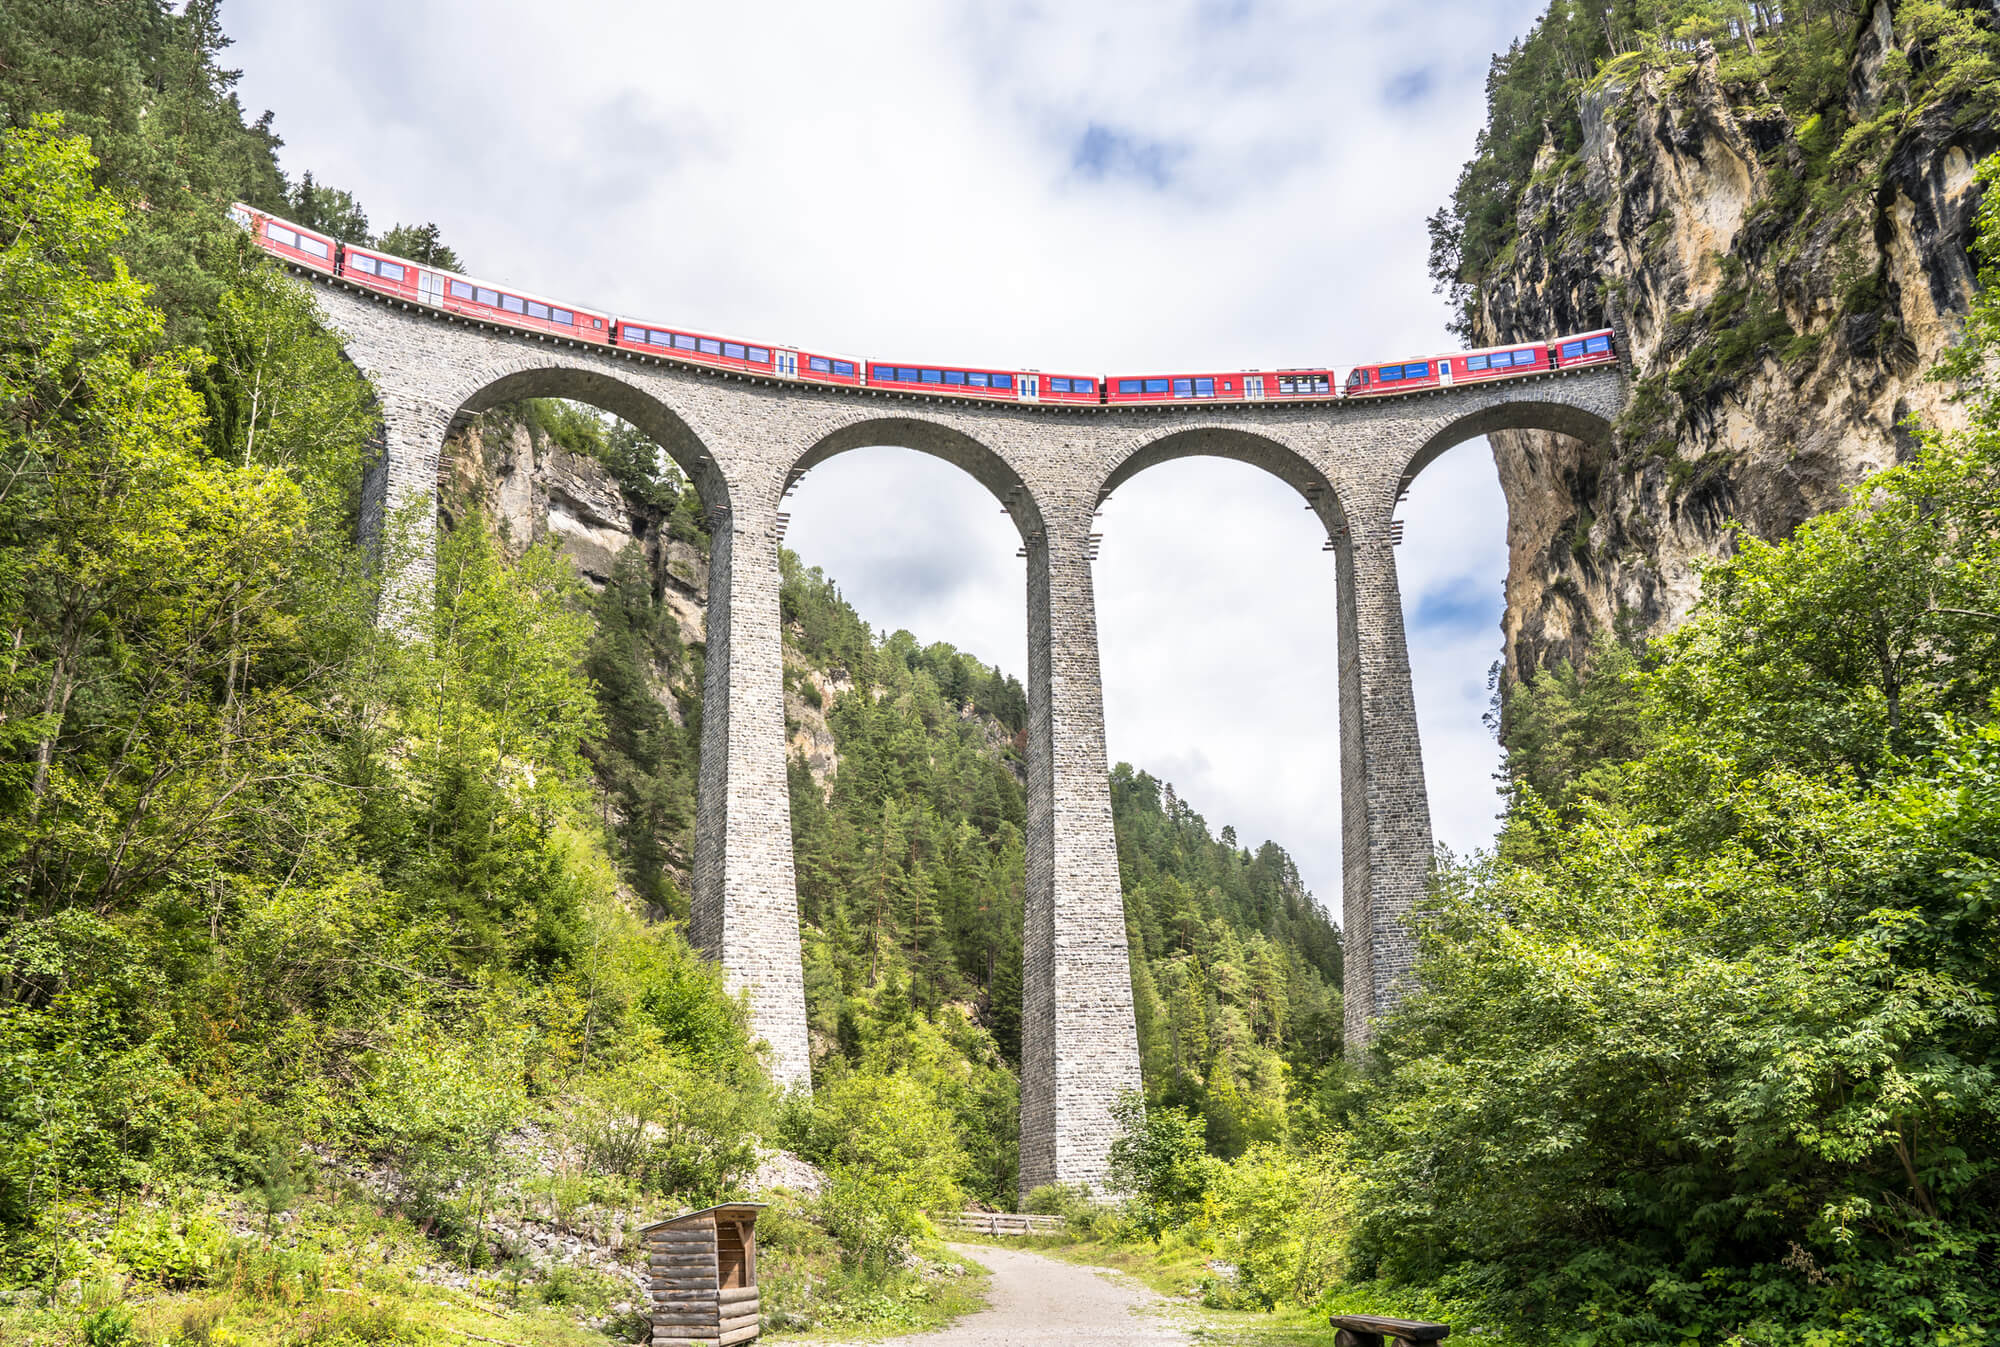 The Bernina Express crosses a viaduct in Switzerland